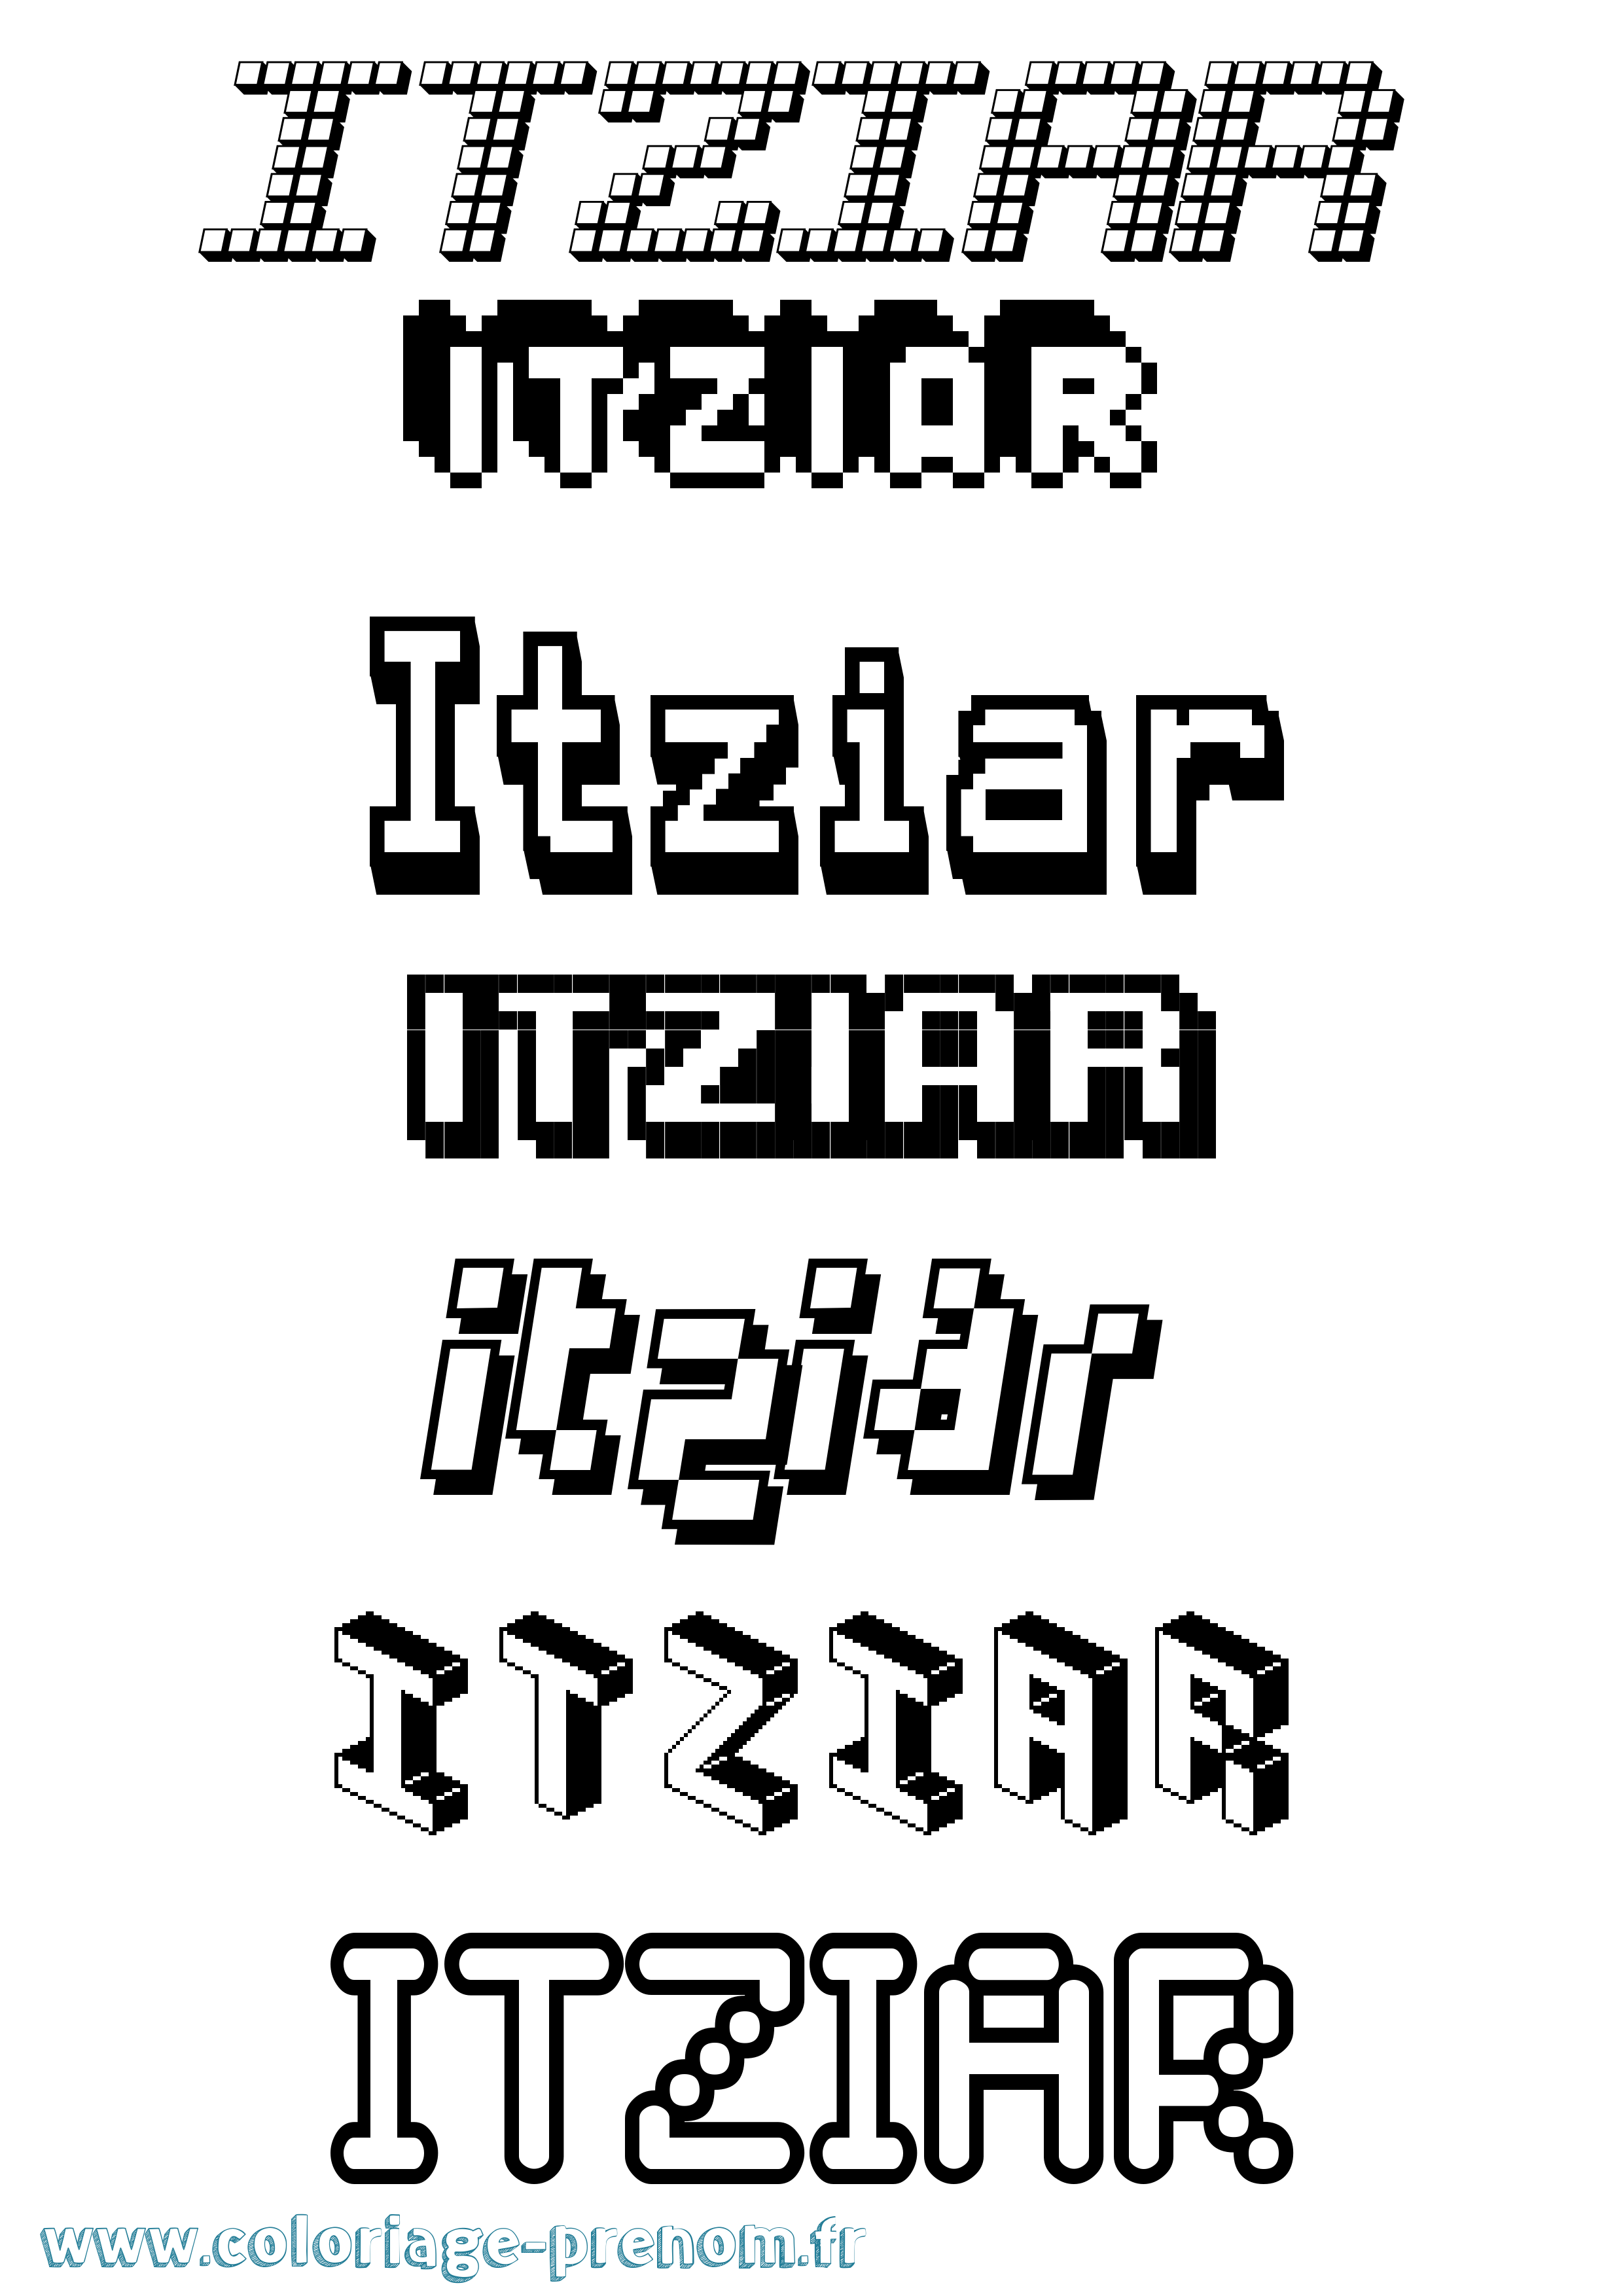 Coloriage prénom Itziar Pixel